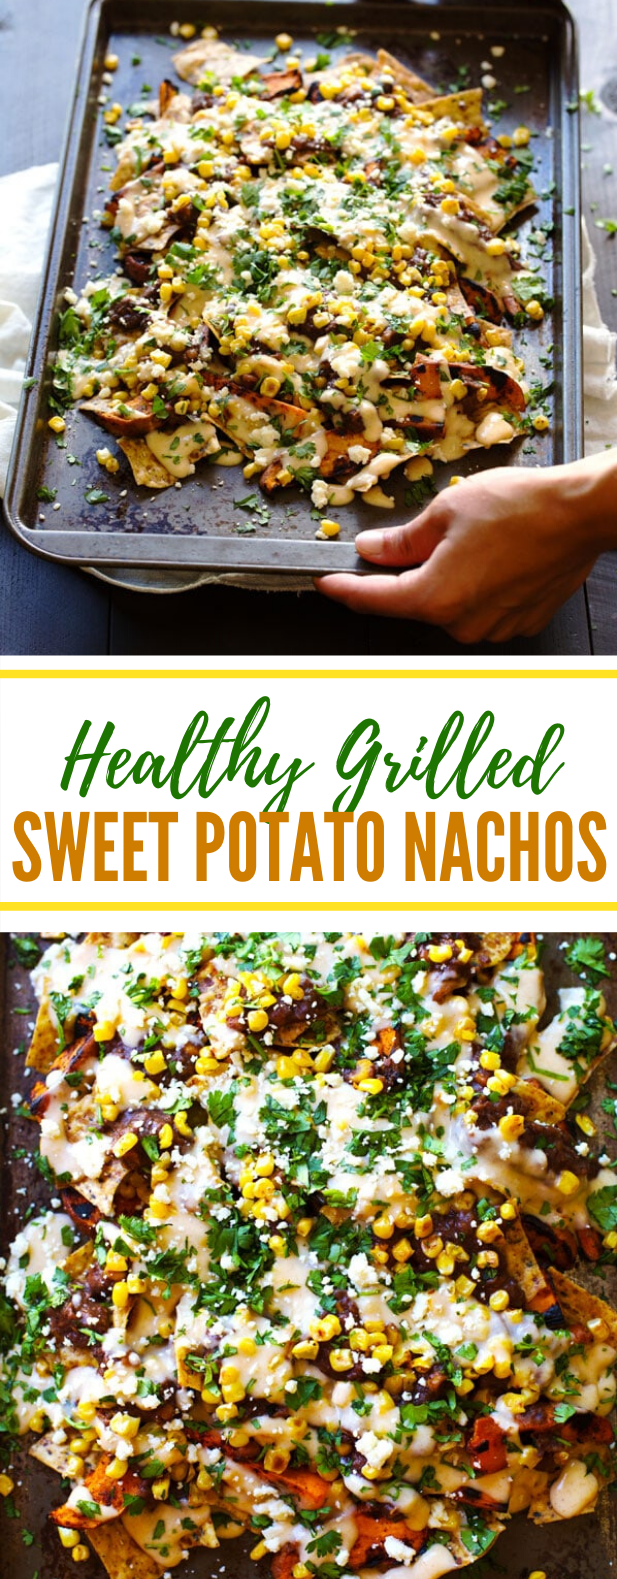 healthy grilled sweet potato nachos #vegetarian #appetizers #healthy #nachos #veggies